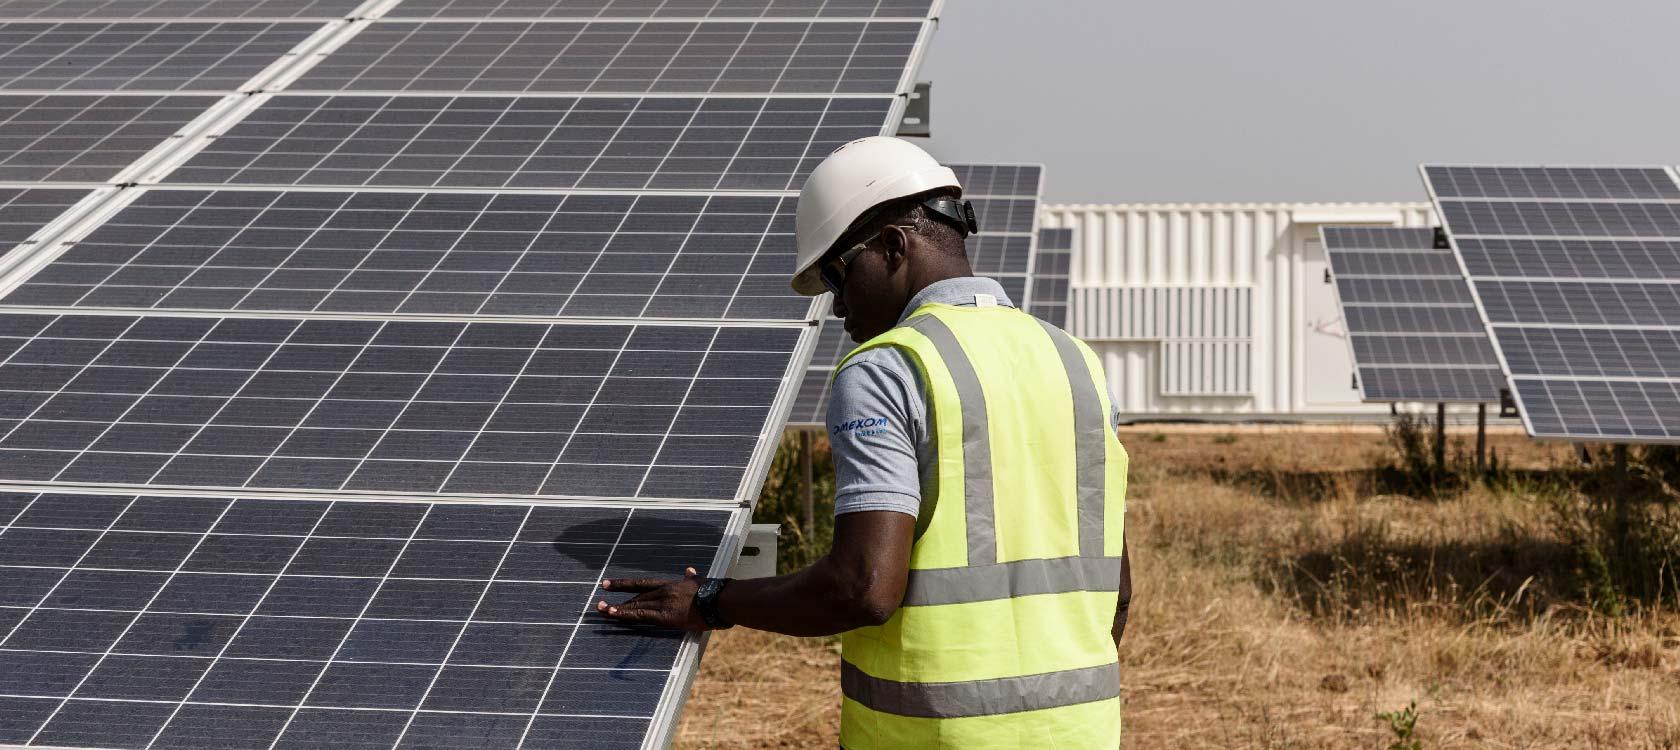 Niger's Photovoltaic Solar Power Plants